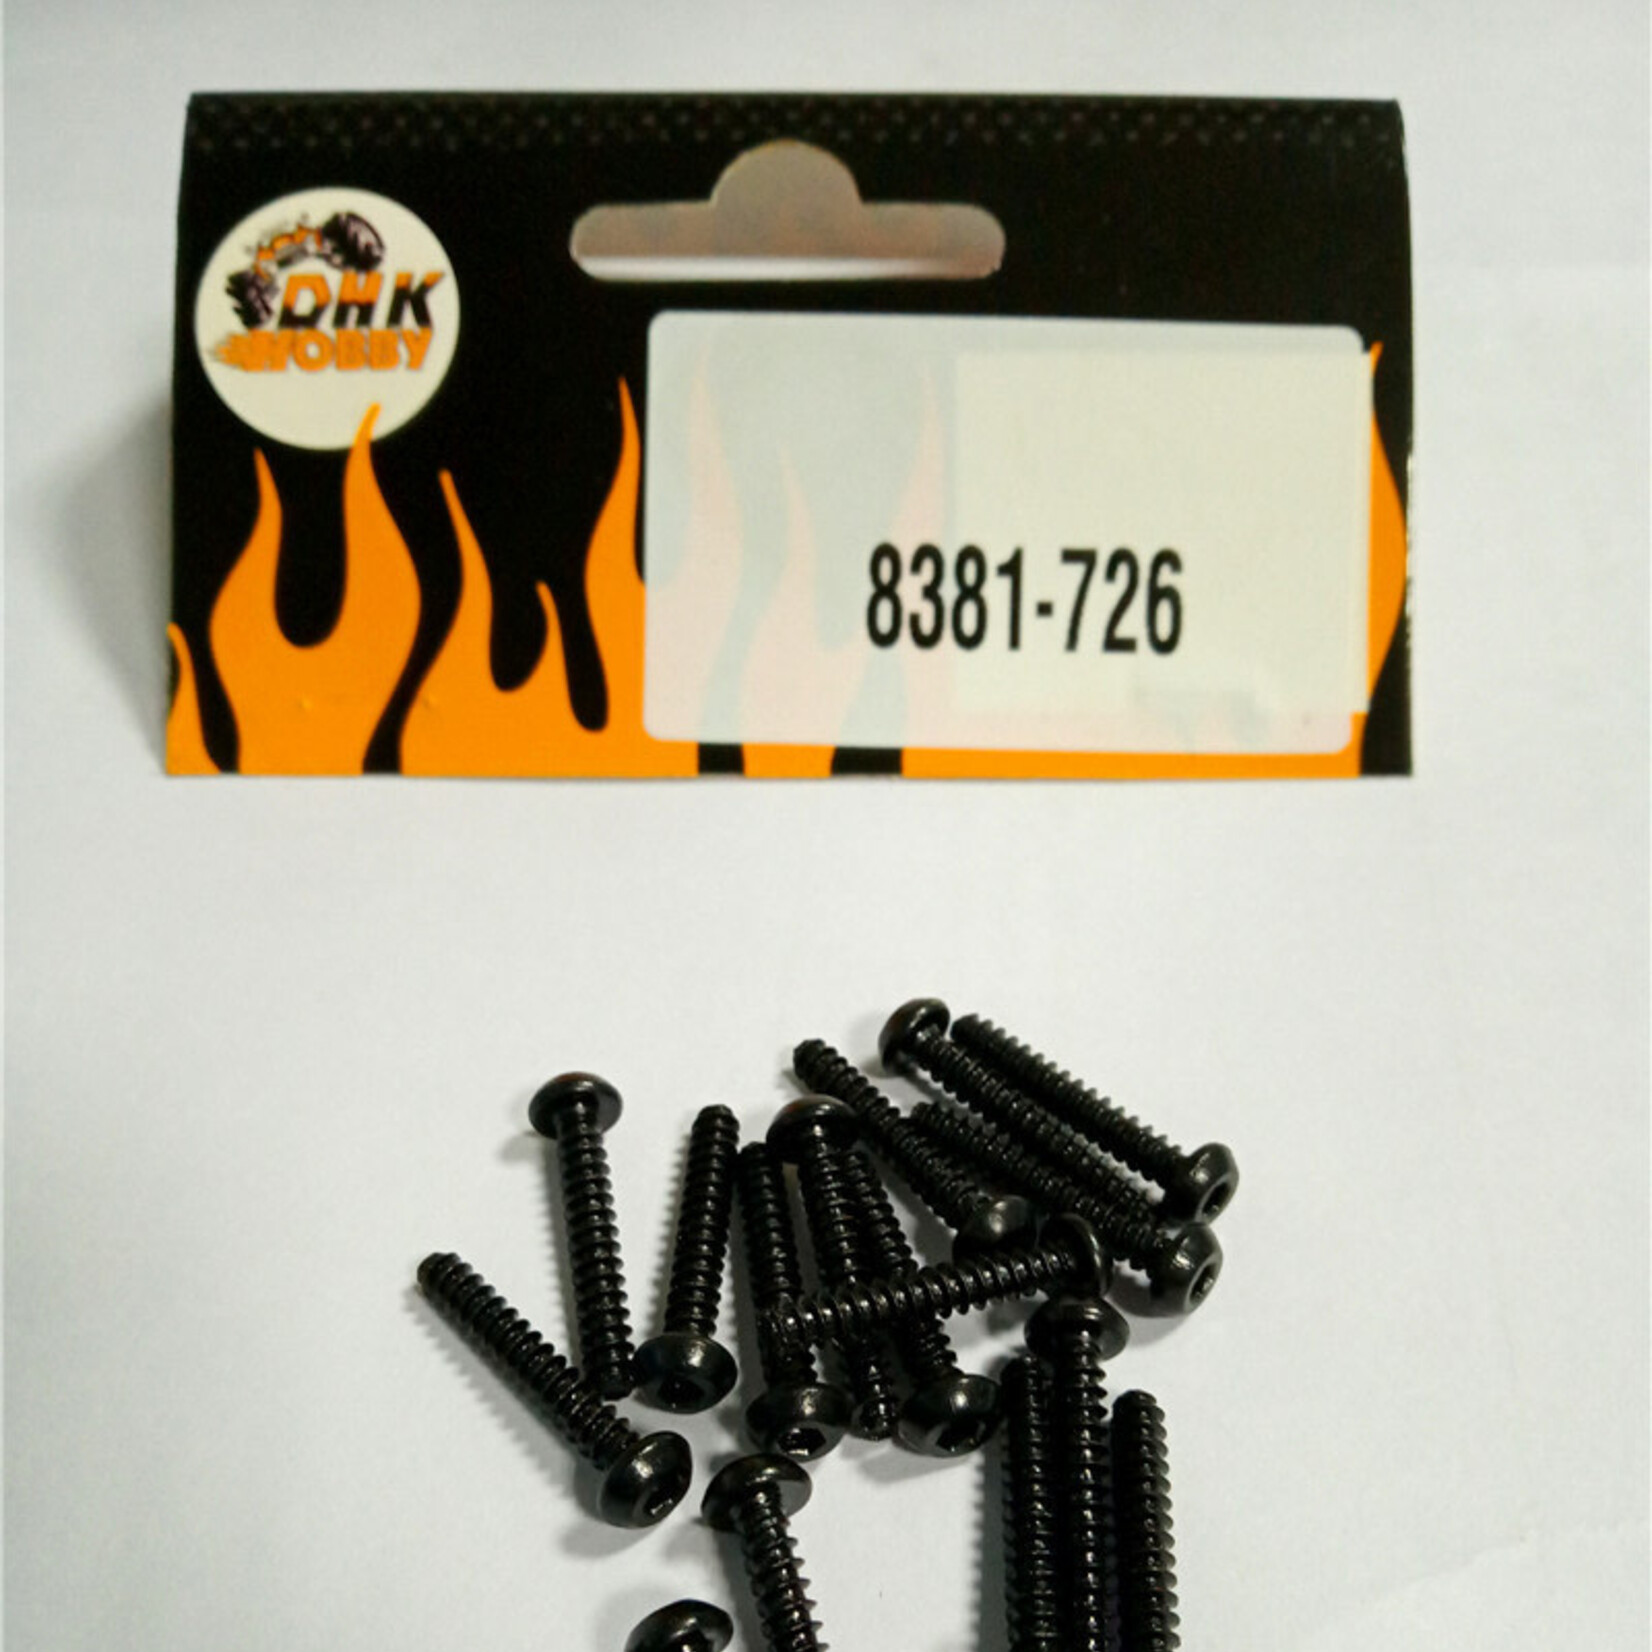 DHK Hobby DHK Hobby 8381-726 B Head Screw - Coarse Thread (3x18mm) (16)